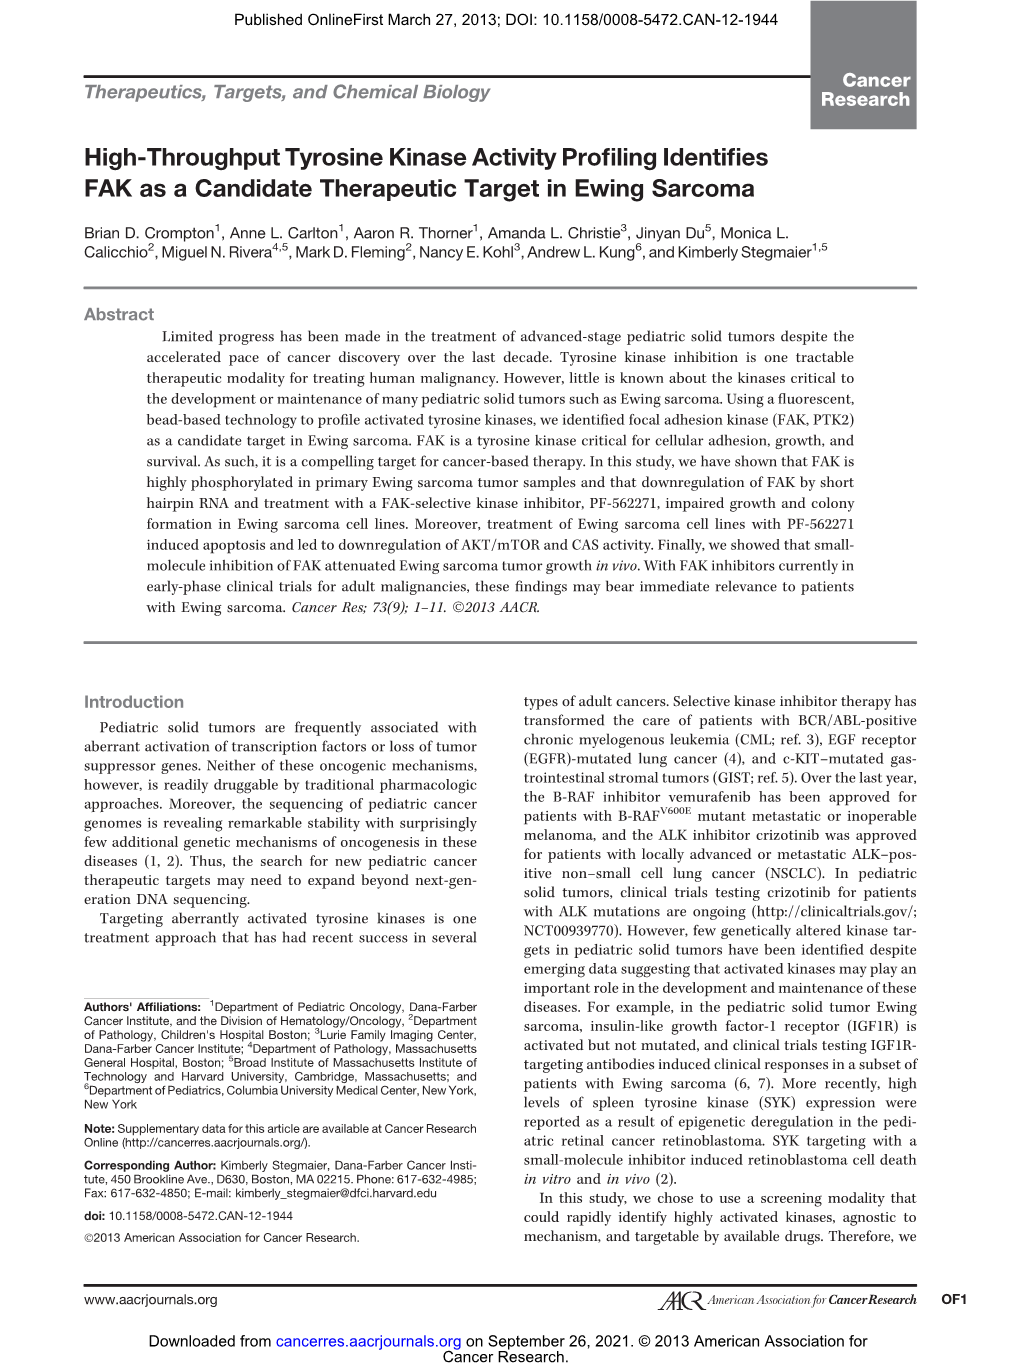 High-Throughput Tyrosine Kinase Activity Profiling Identifies FAK As a Candidate Therapeutic Target in Ewing Sarcoma